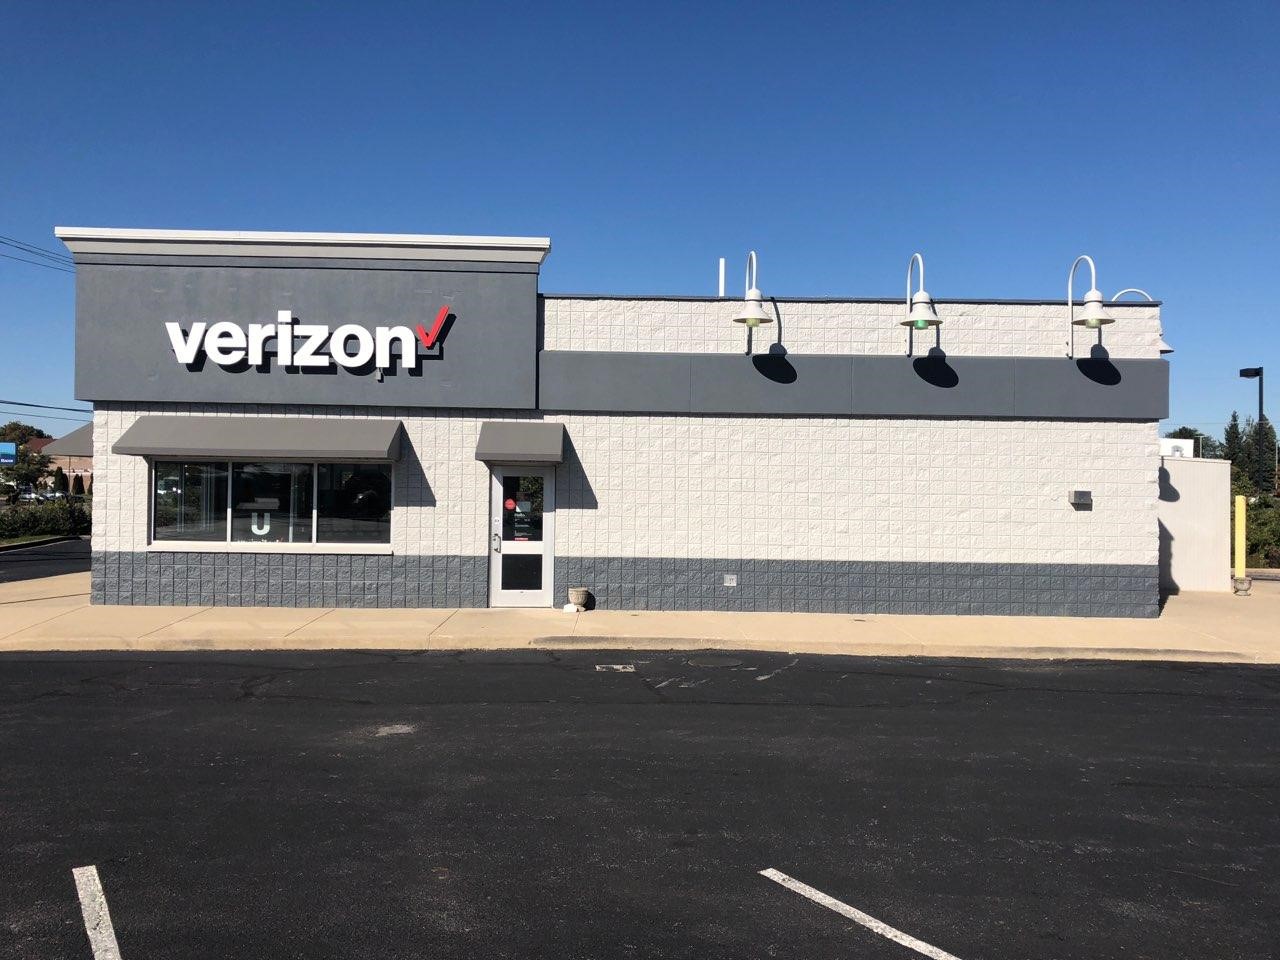 TCC, Verizon Authorized Retailer
81 N State Road 135
Greenwood, IN